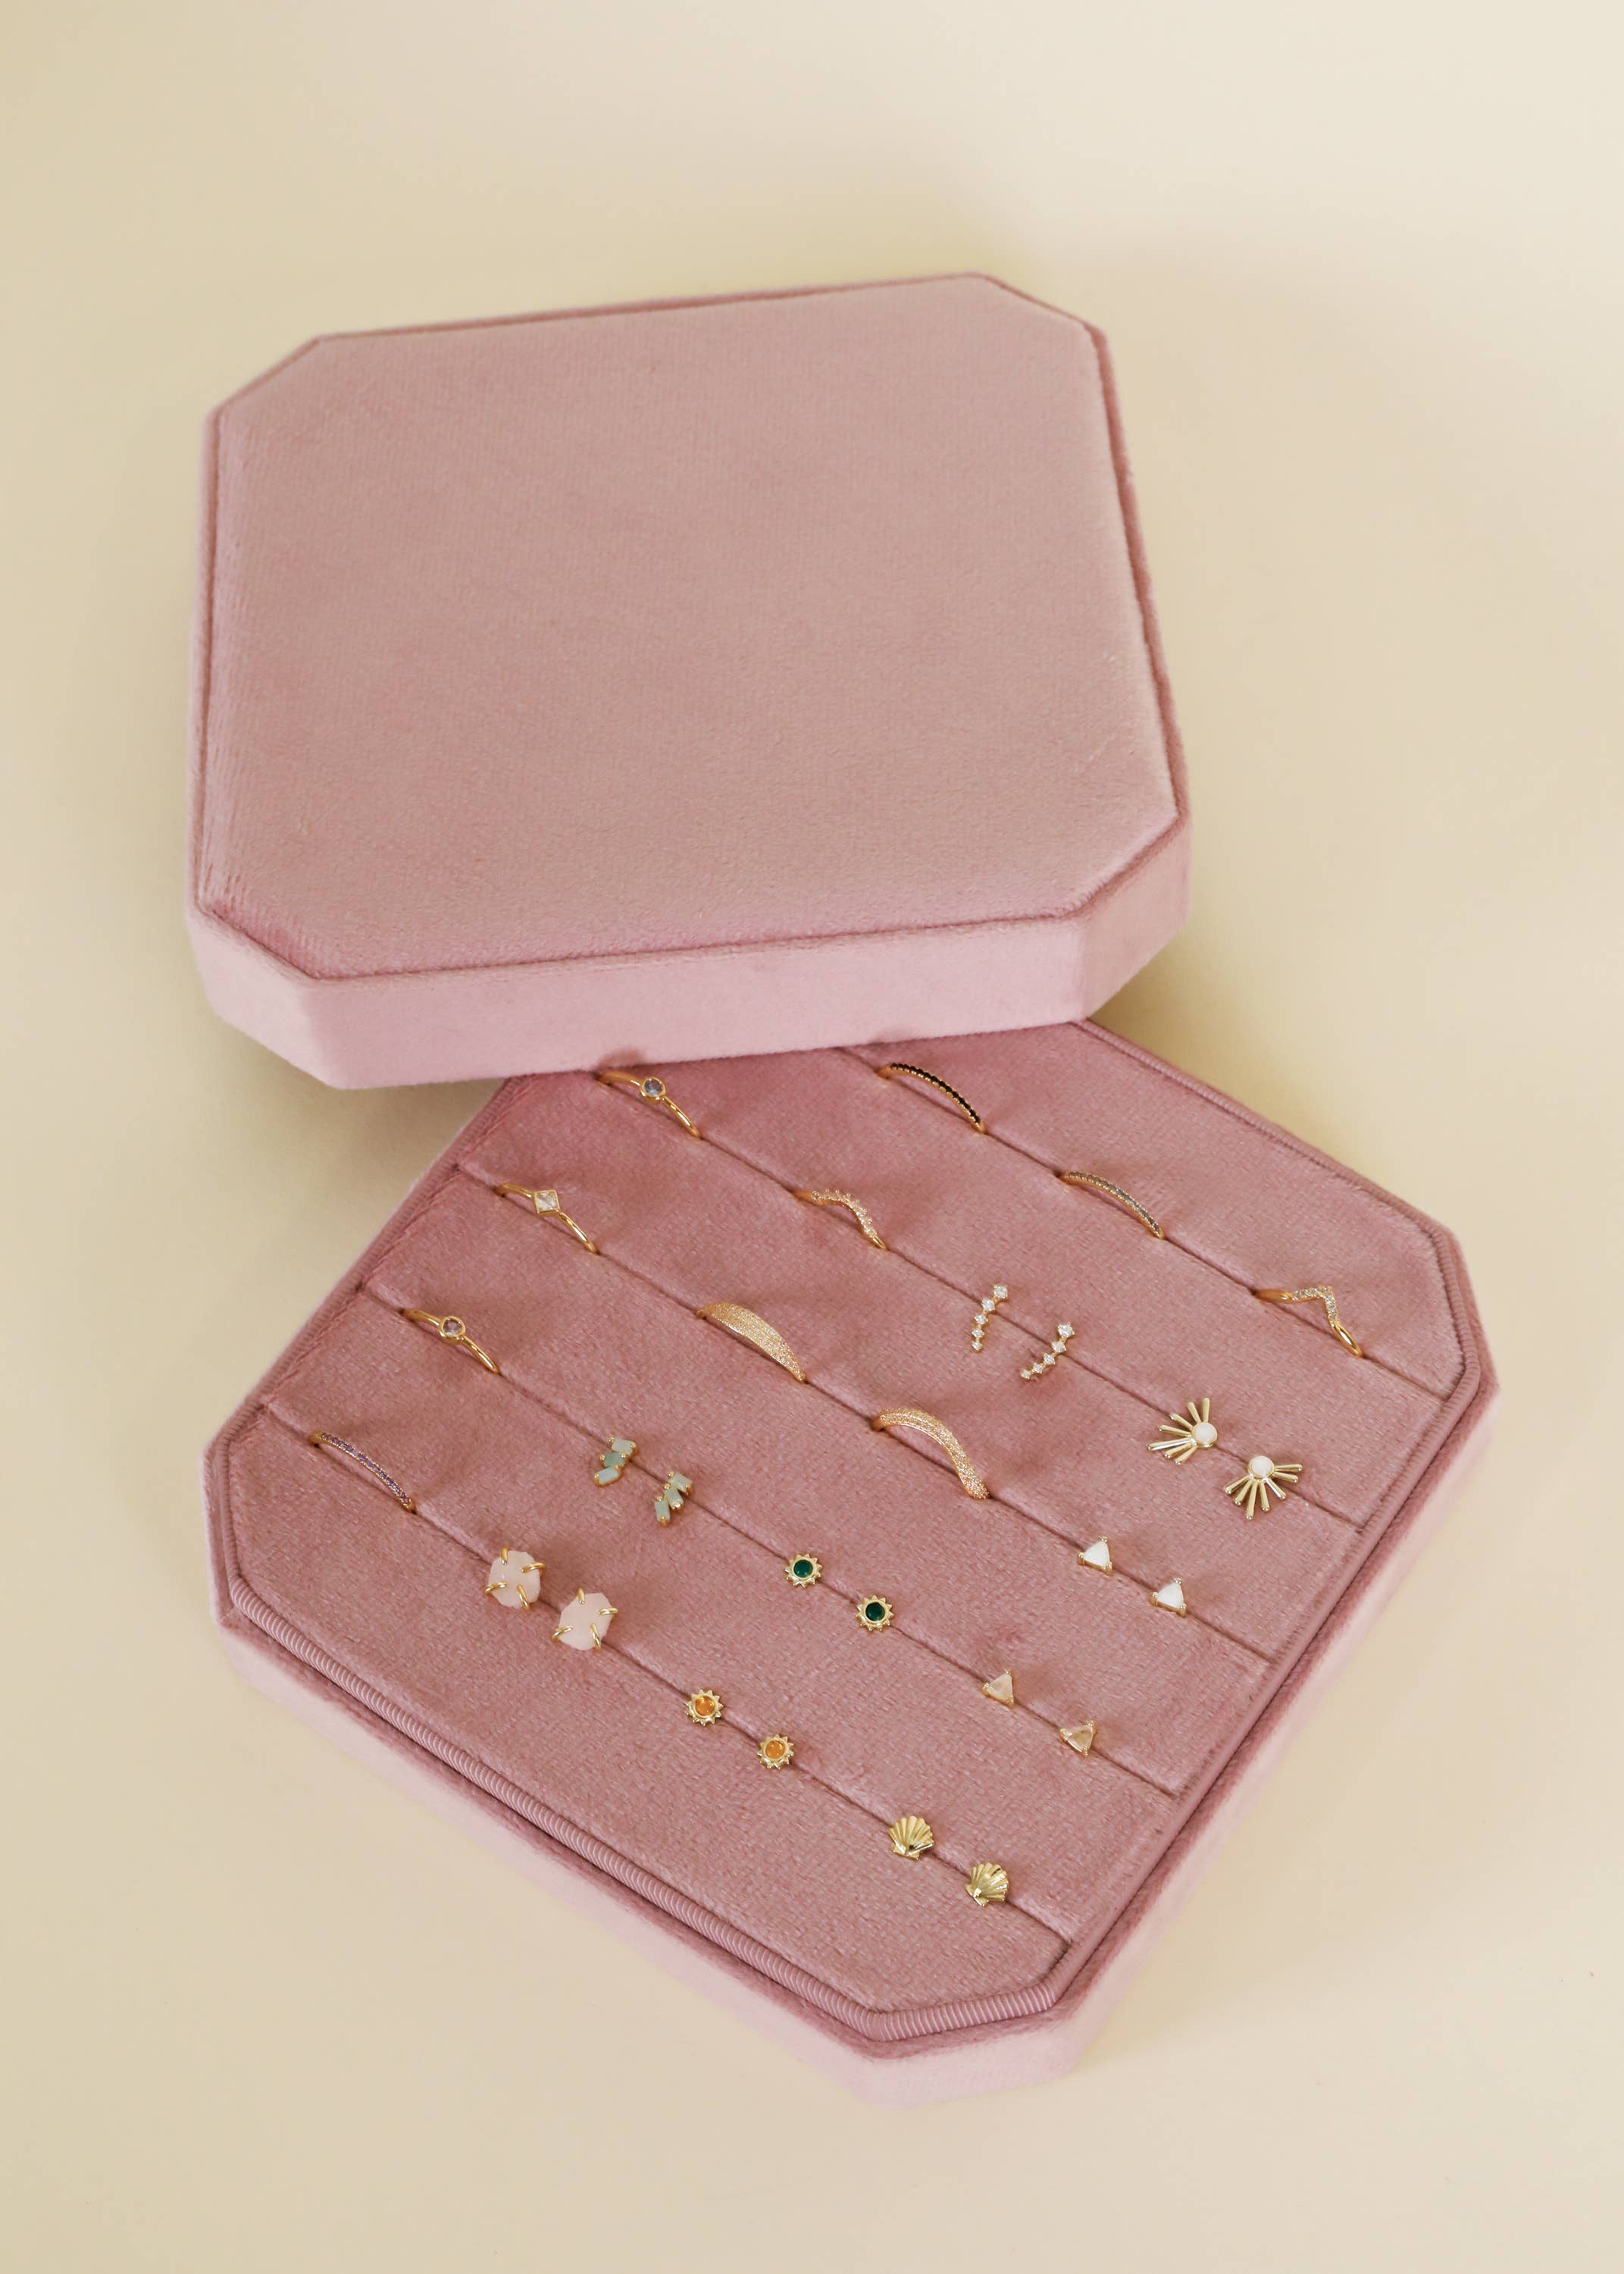 JaxKelly - Velvet Jewelry Box - Large Square - Light Pink